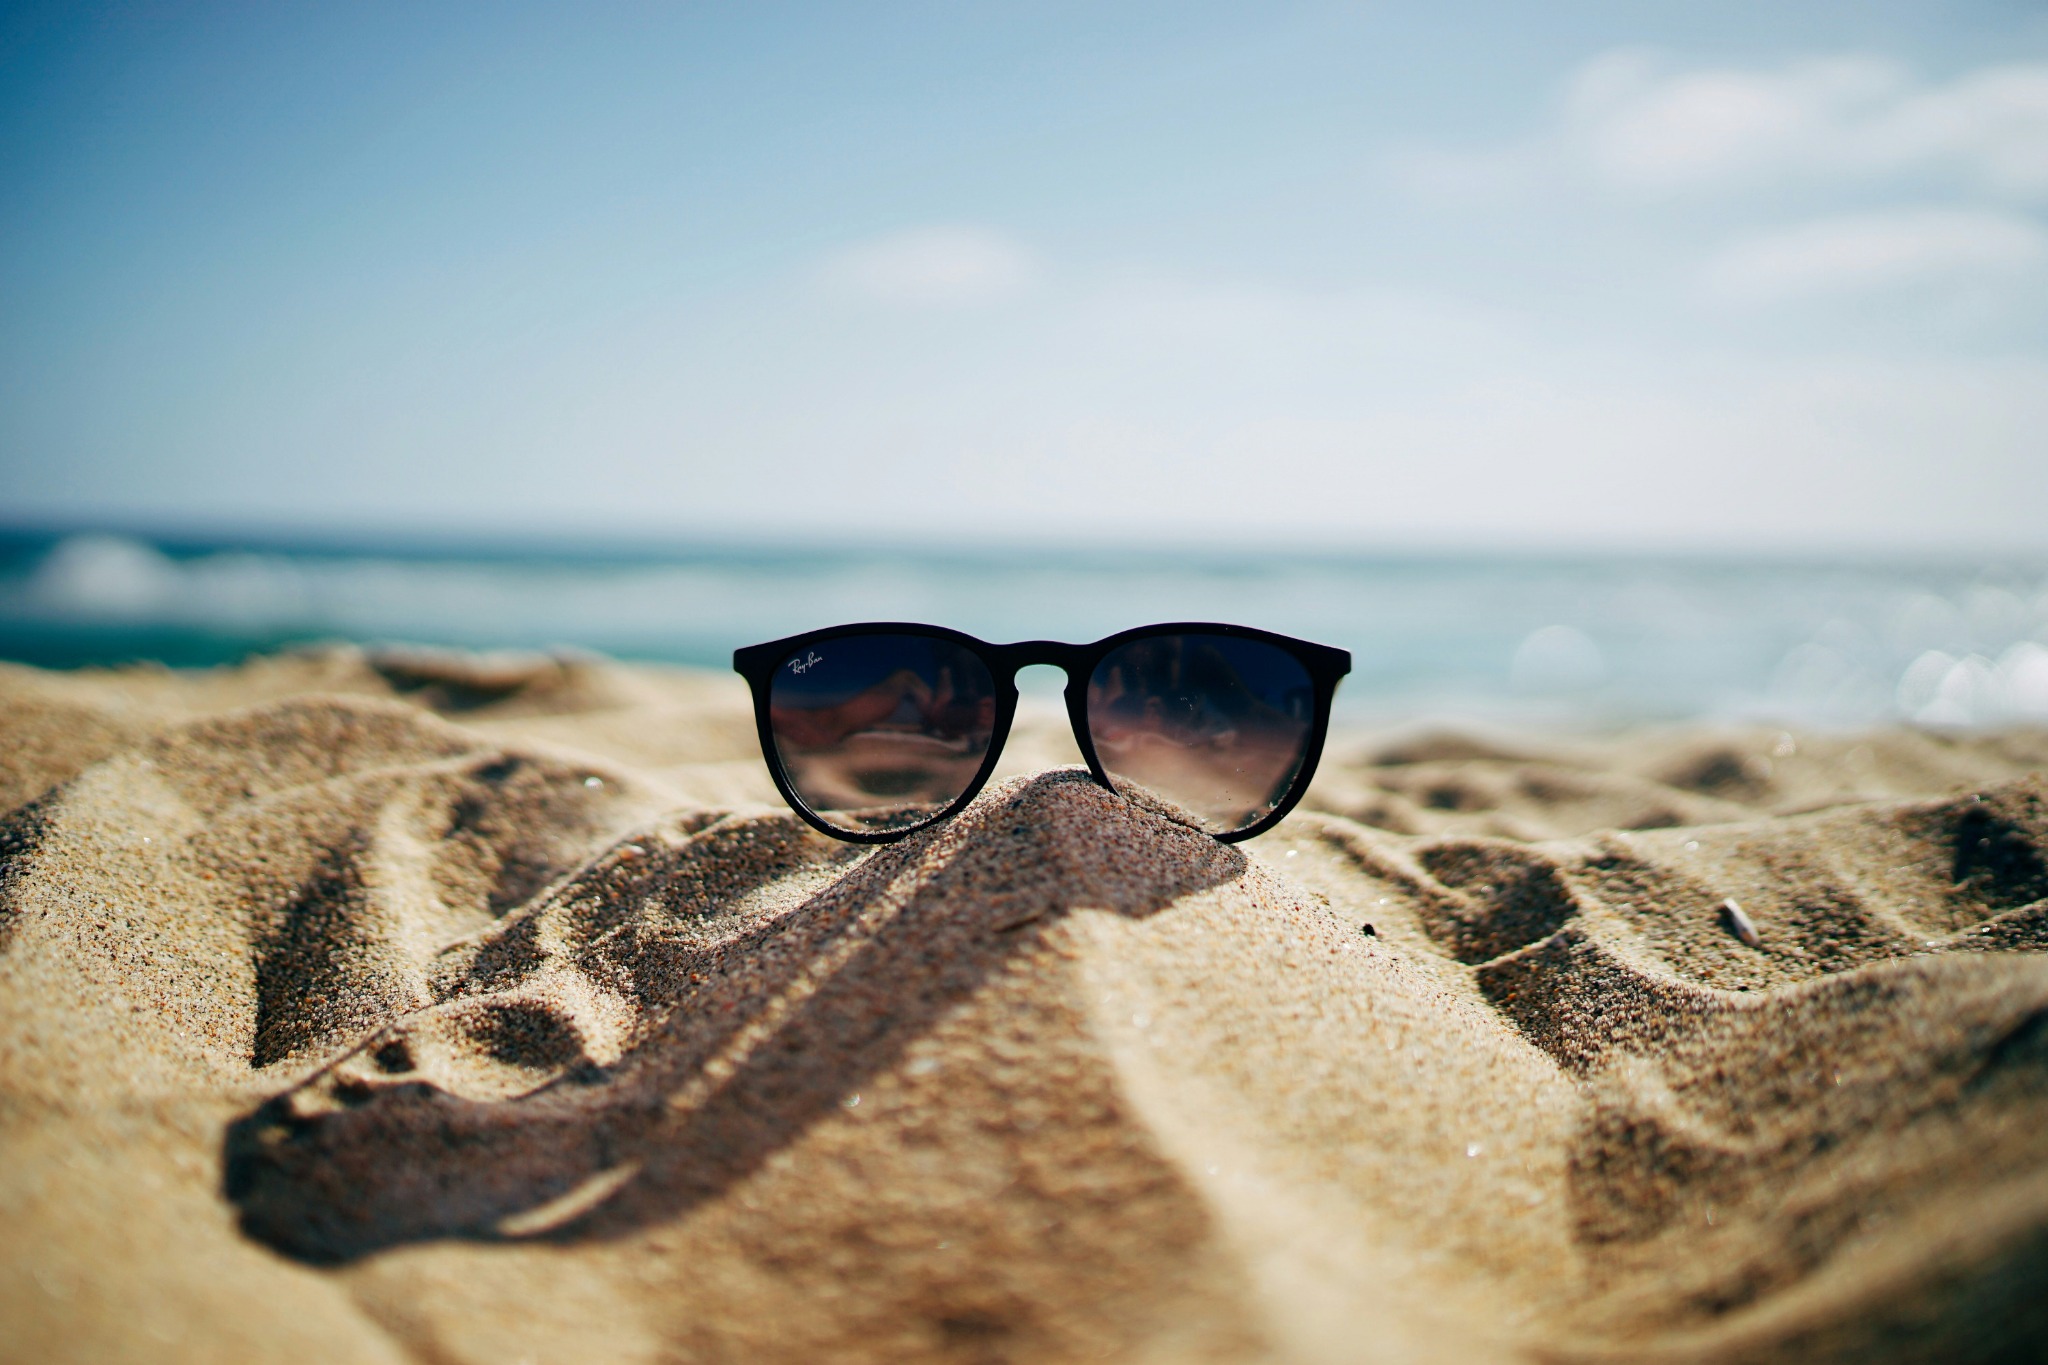 Sunglasses in sand beach